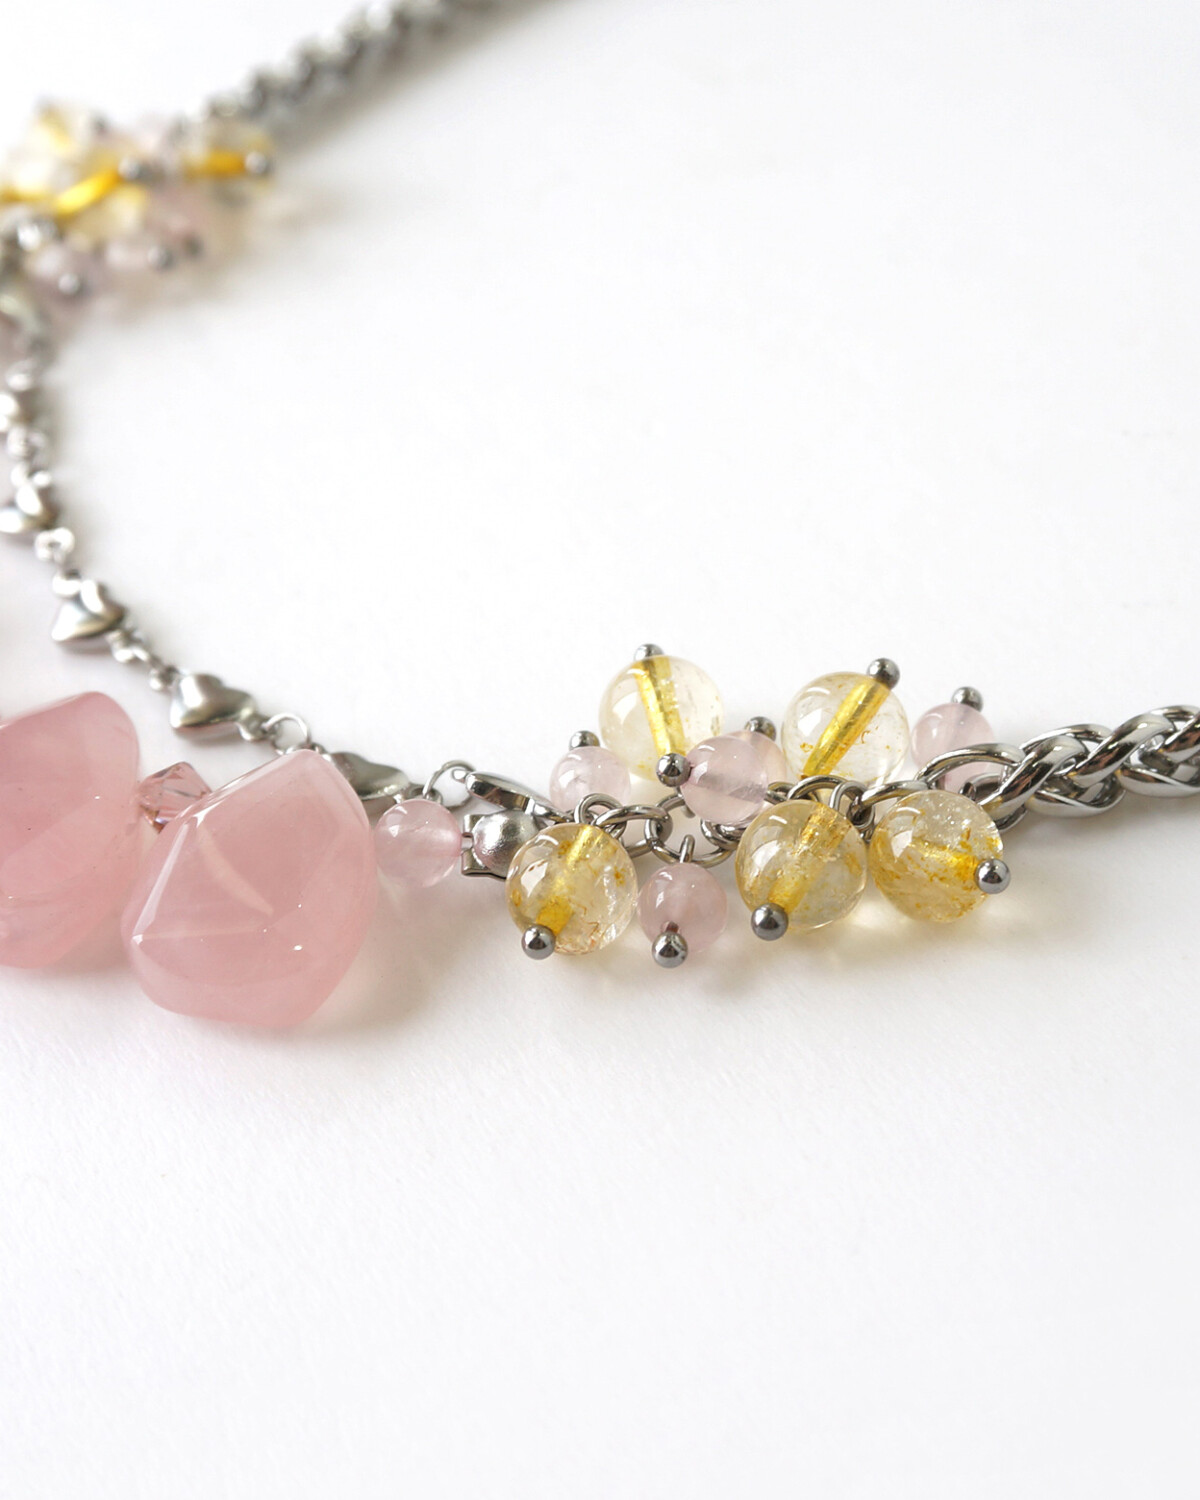 pink rose quartz crystal bib statement necklace